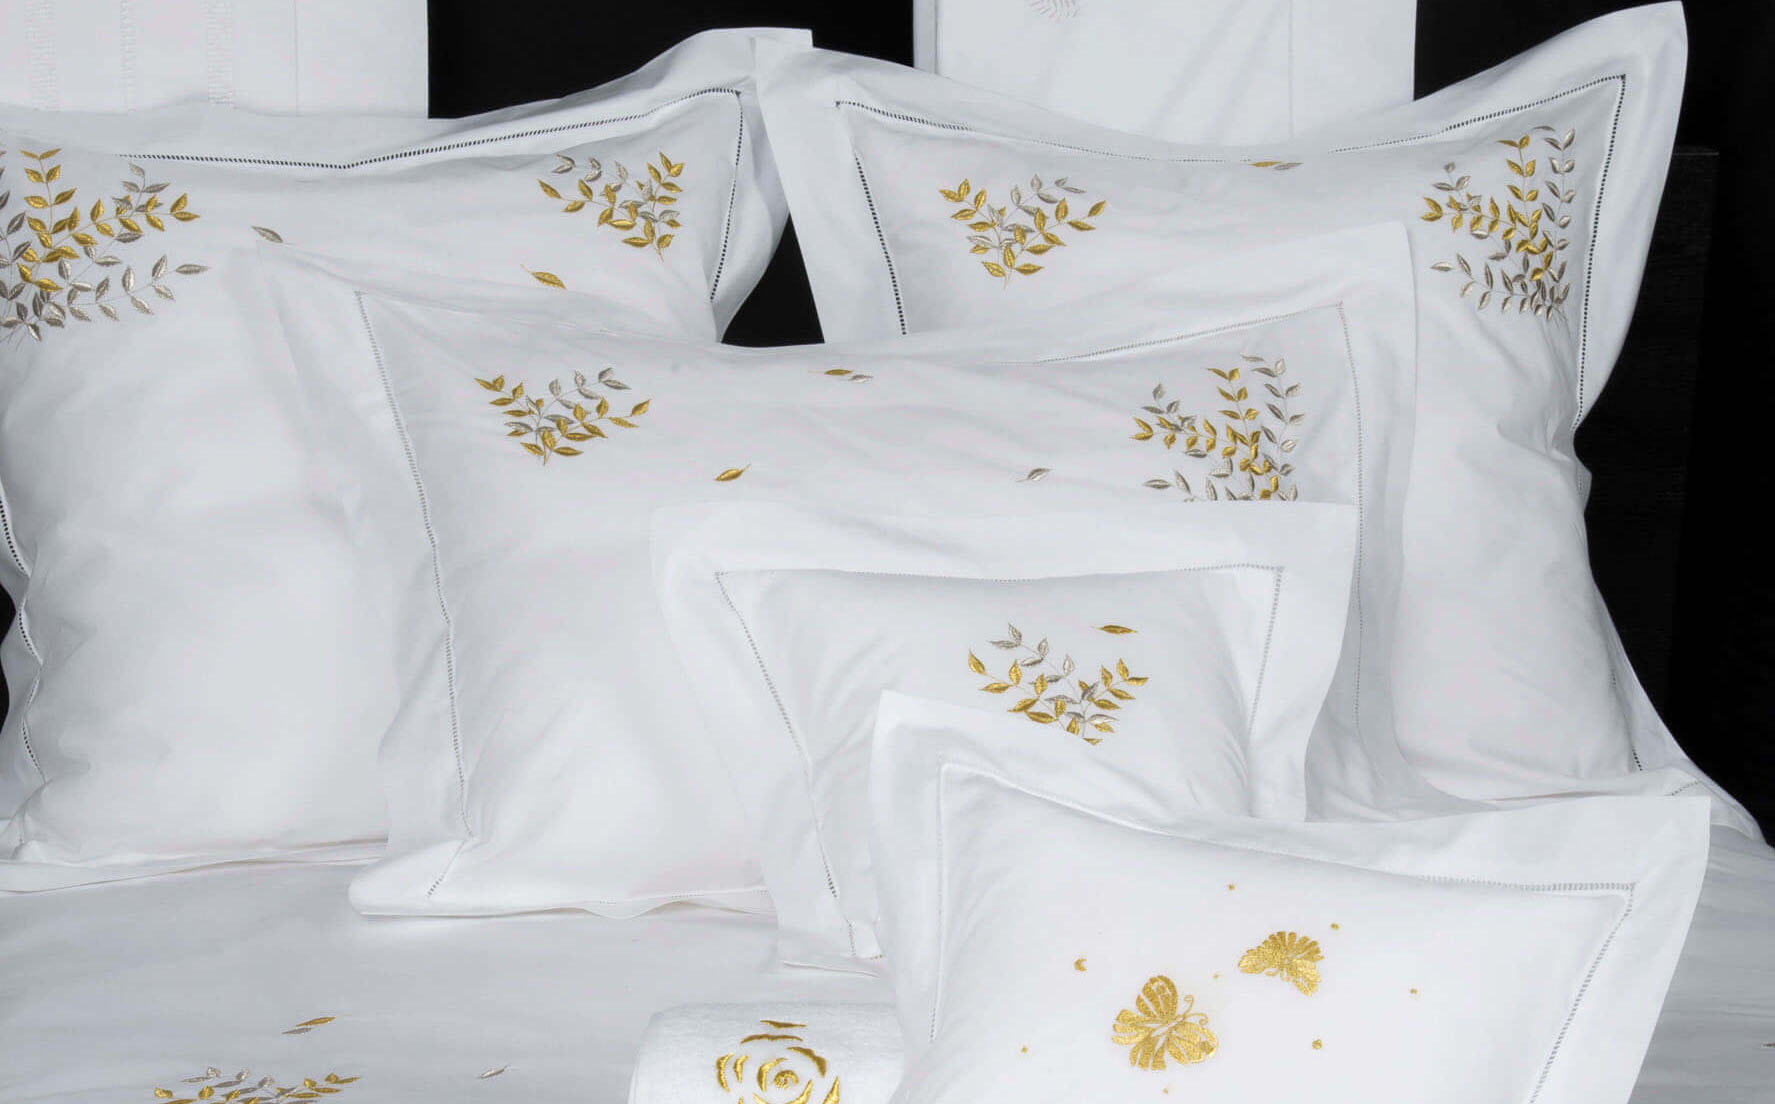 Наволочка Reverie Pillows Франция ☞ Размер наволочек: 65 x 65 см